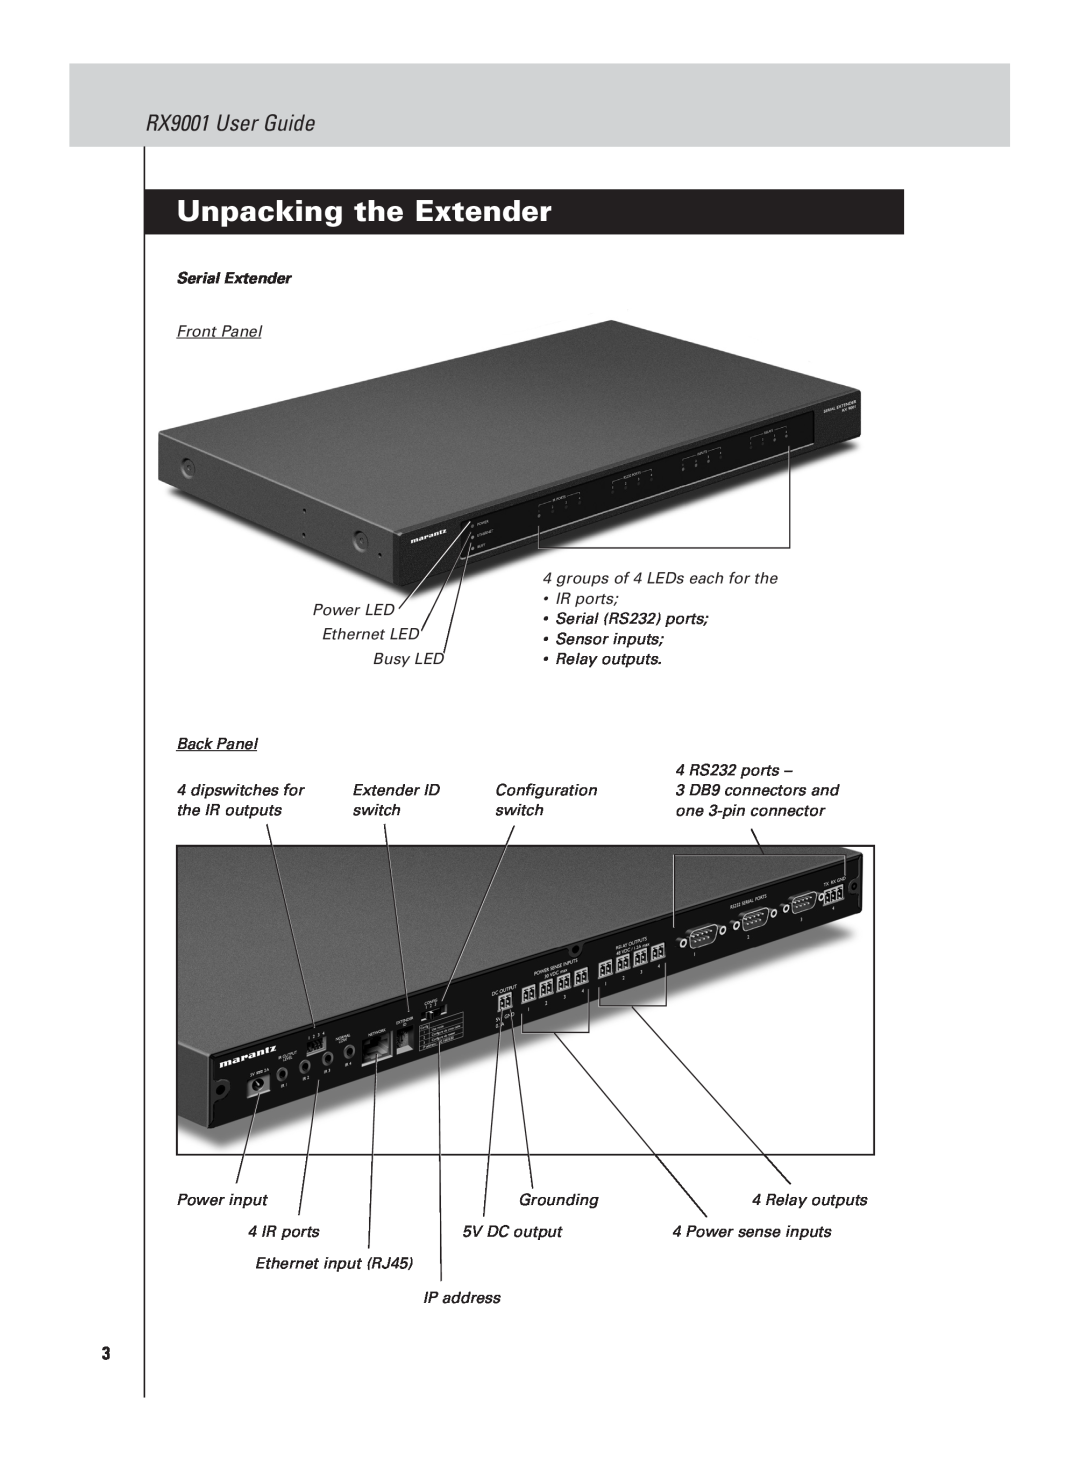 Marantz manual Unpacking the Extender, RX9001 User Guide, Serial Extender 